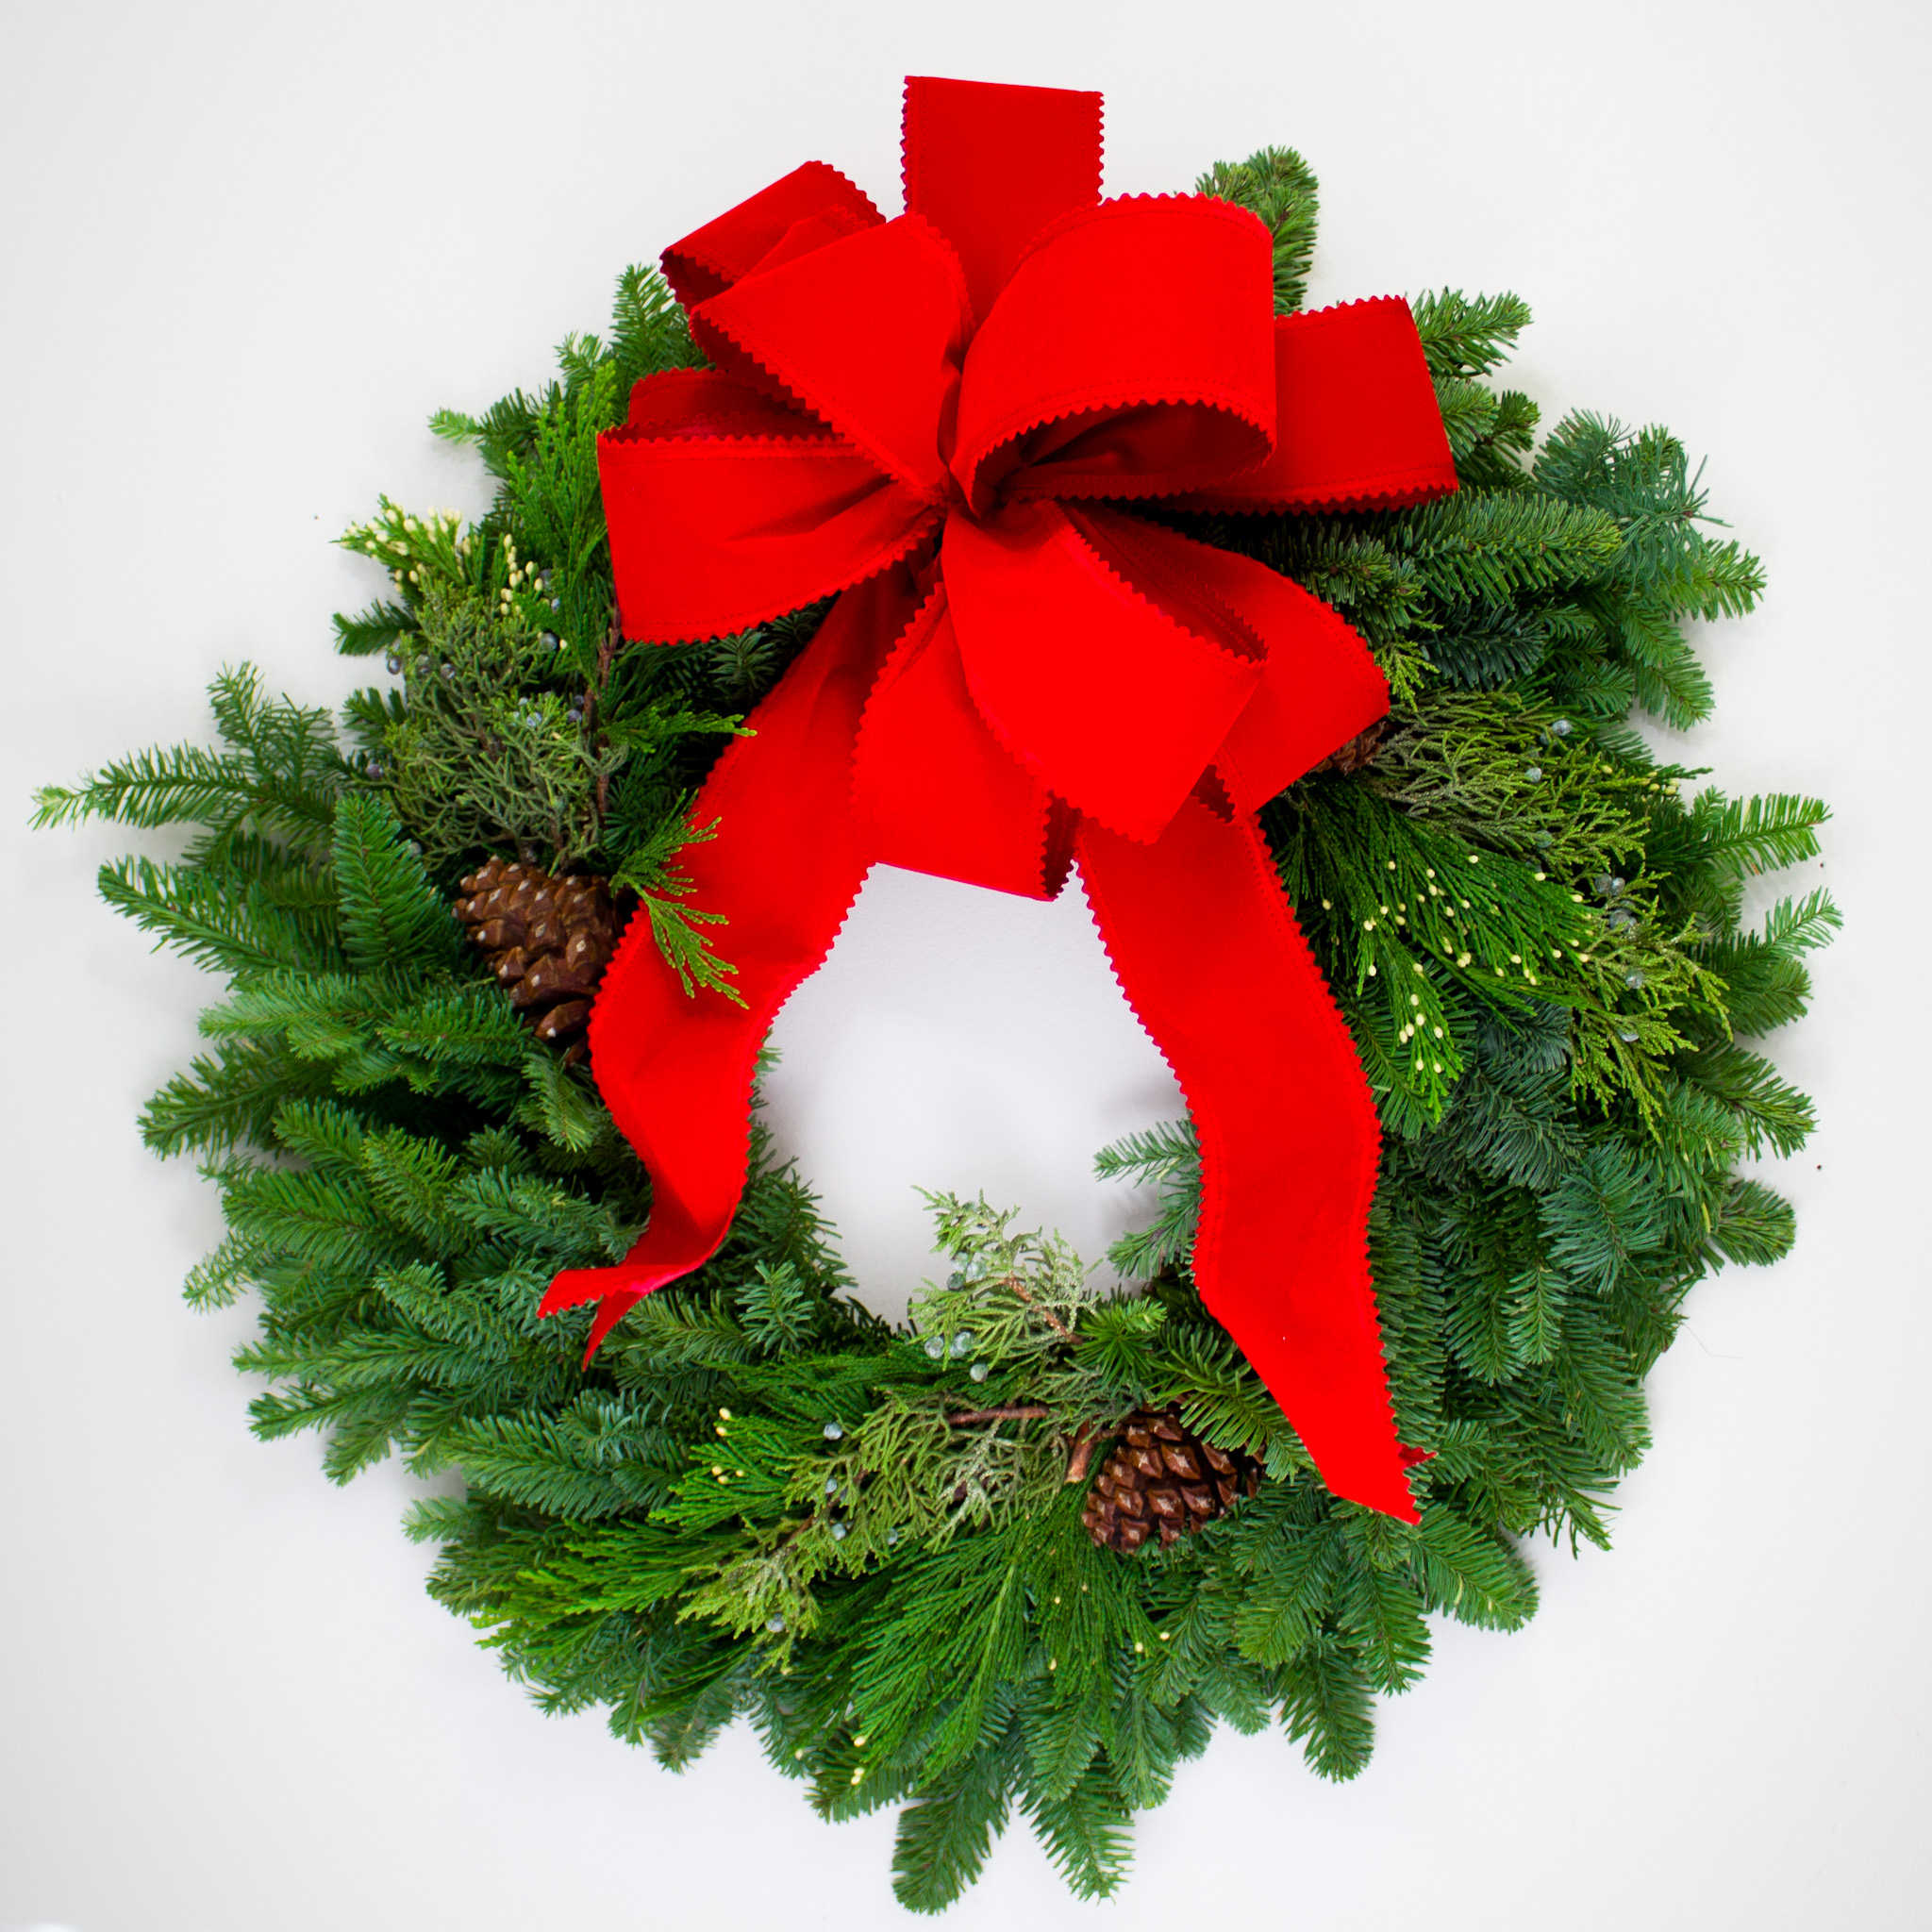 Holiday Spirit Wreath